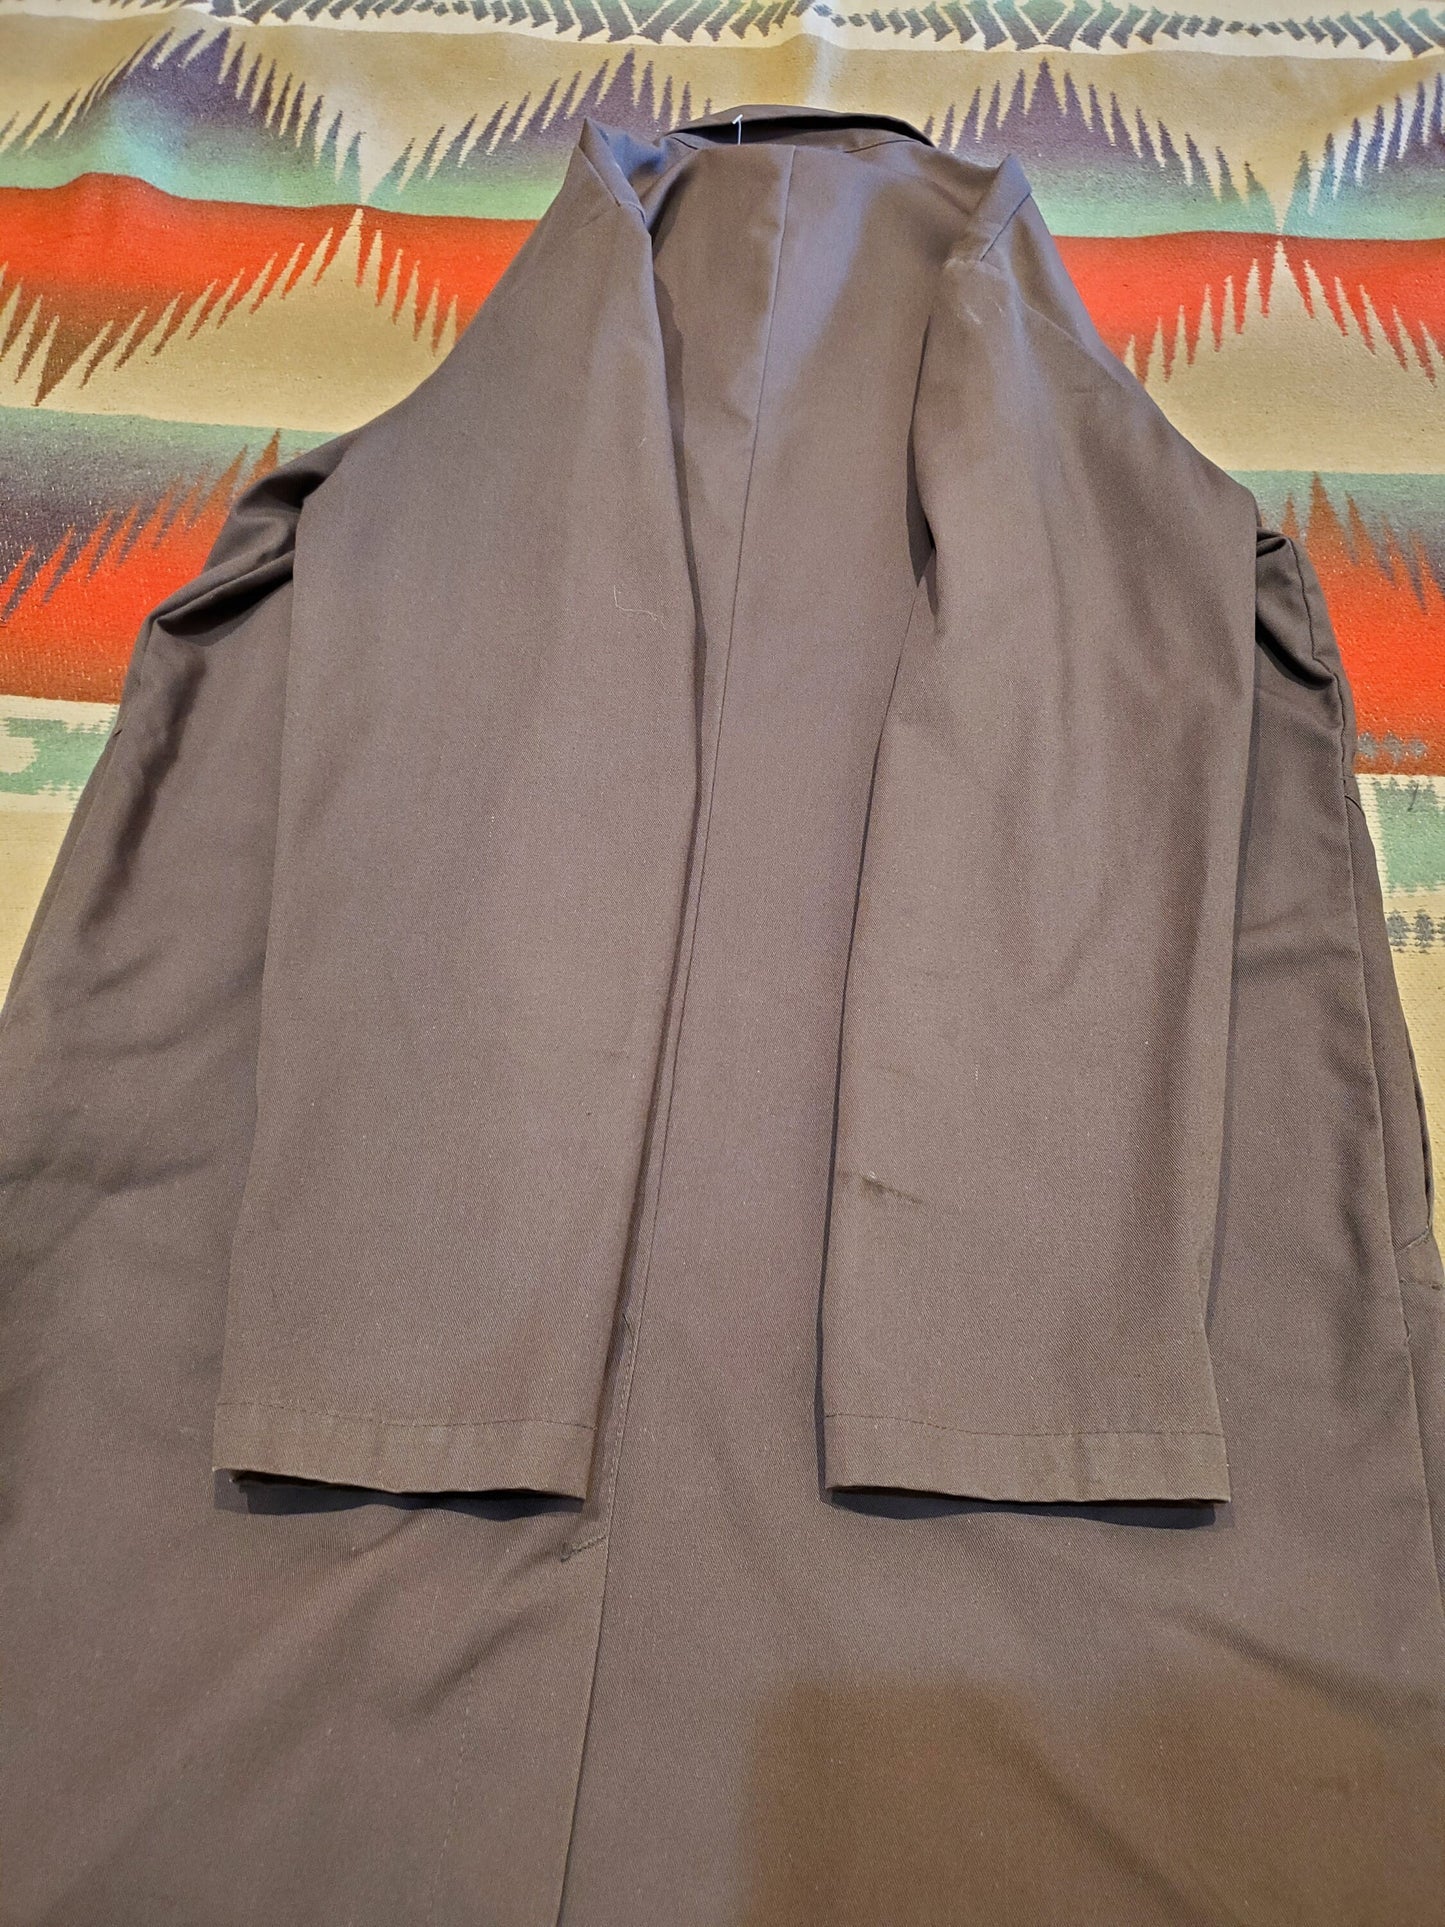 1980s/1990s SC Walker Shop Coat Made in Canada Size M/L